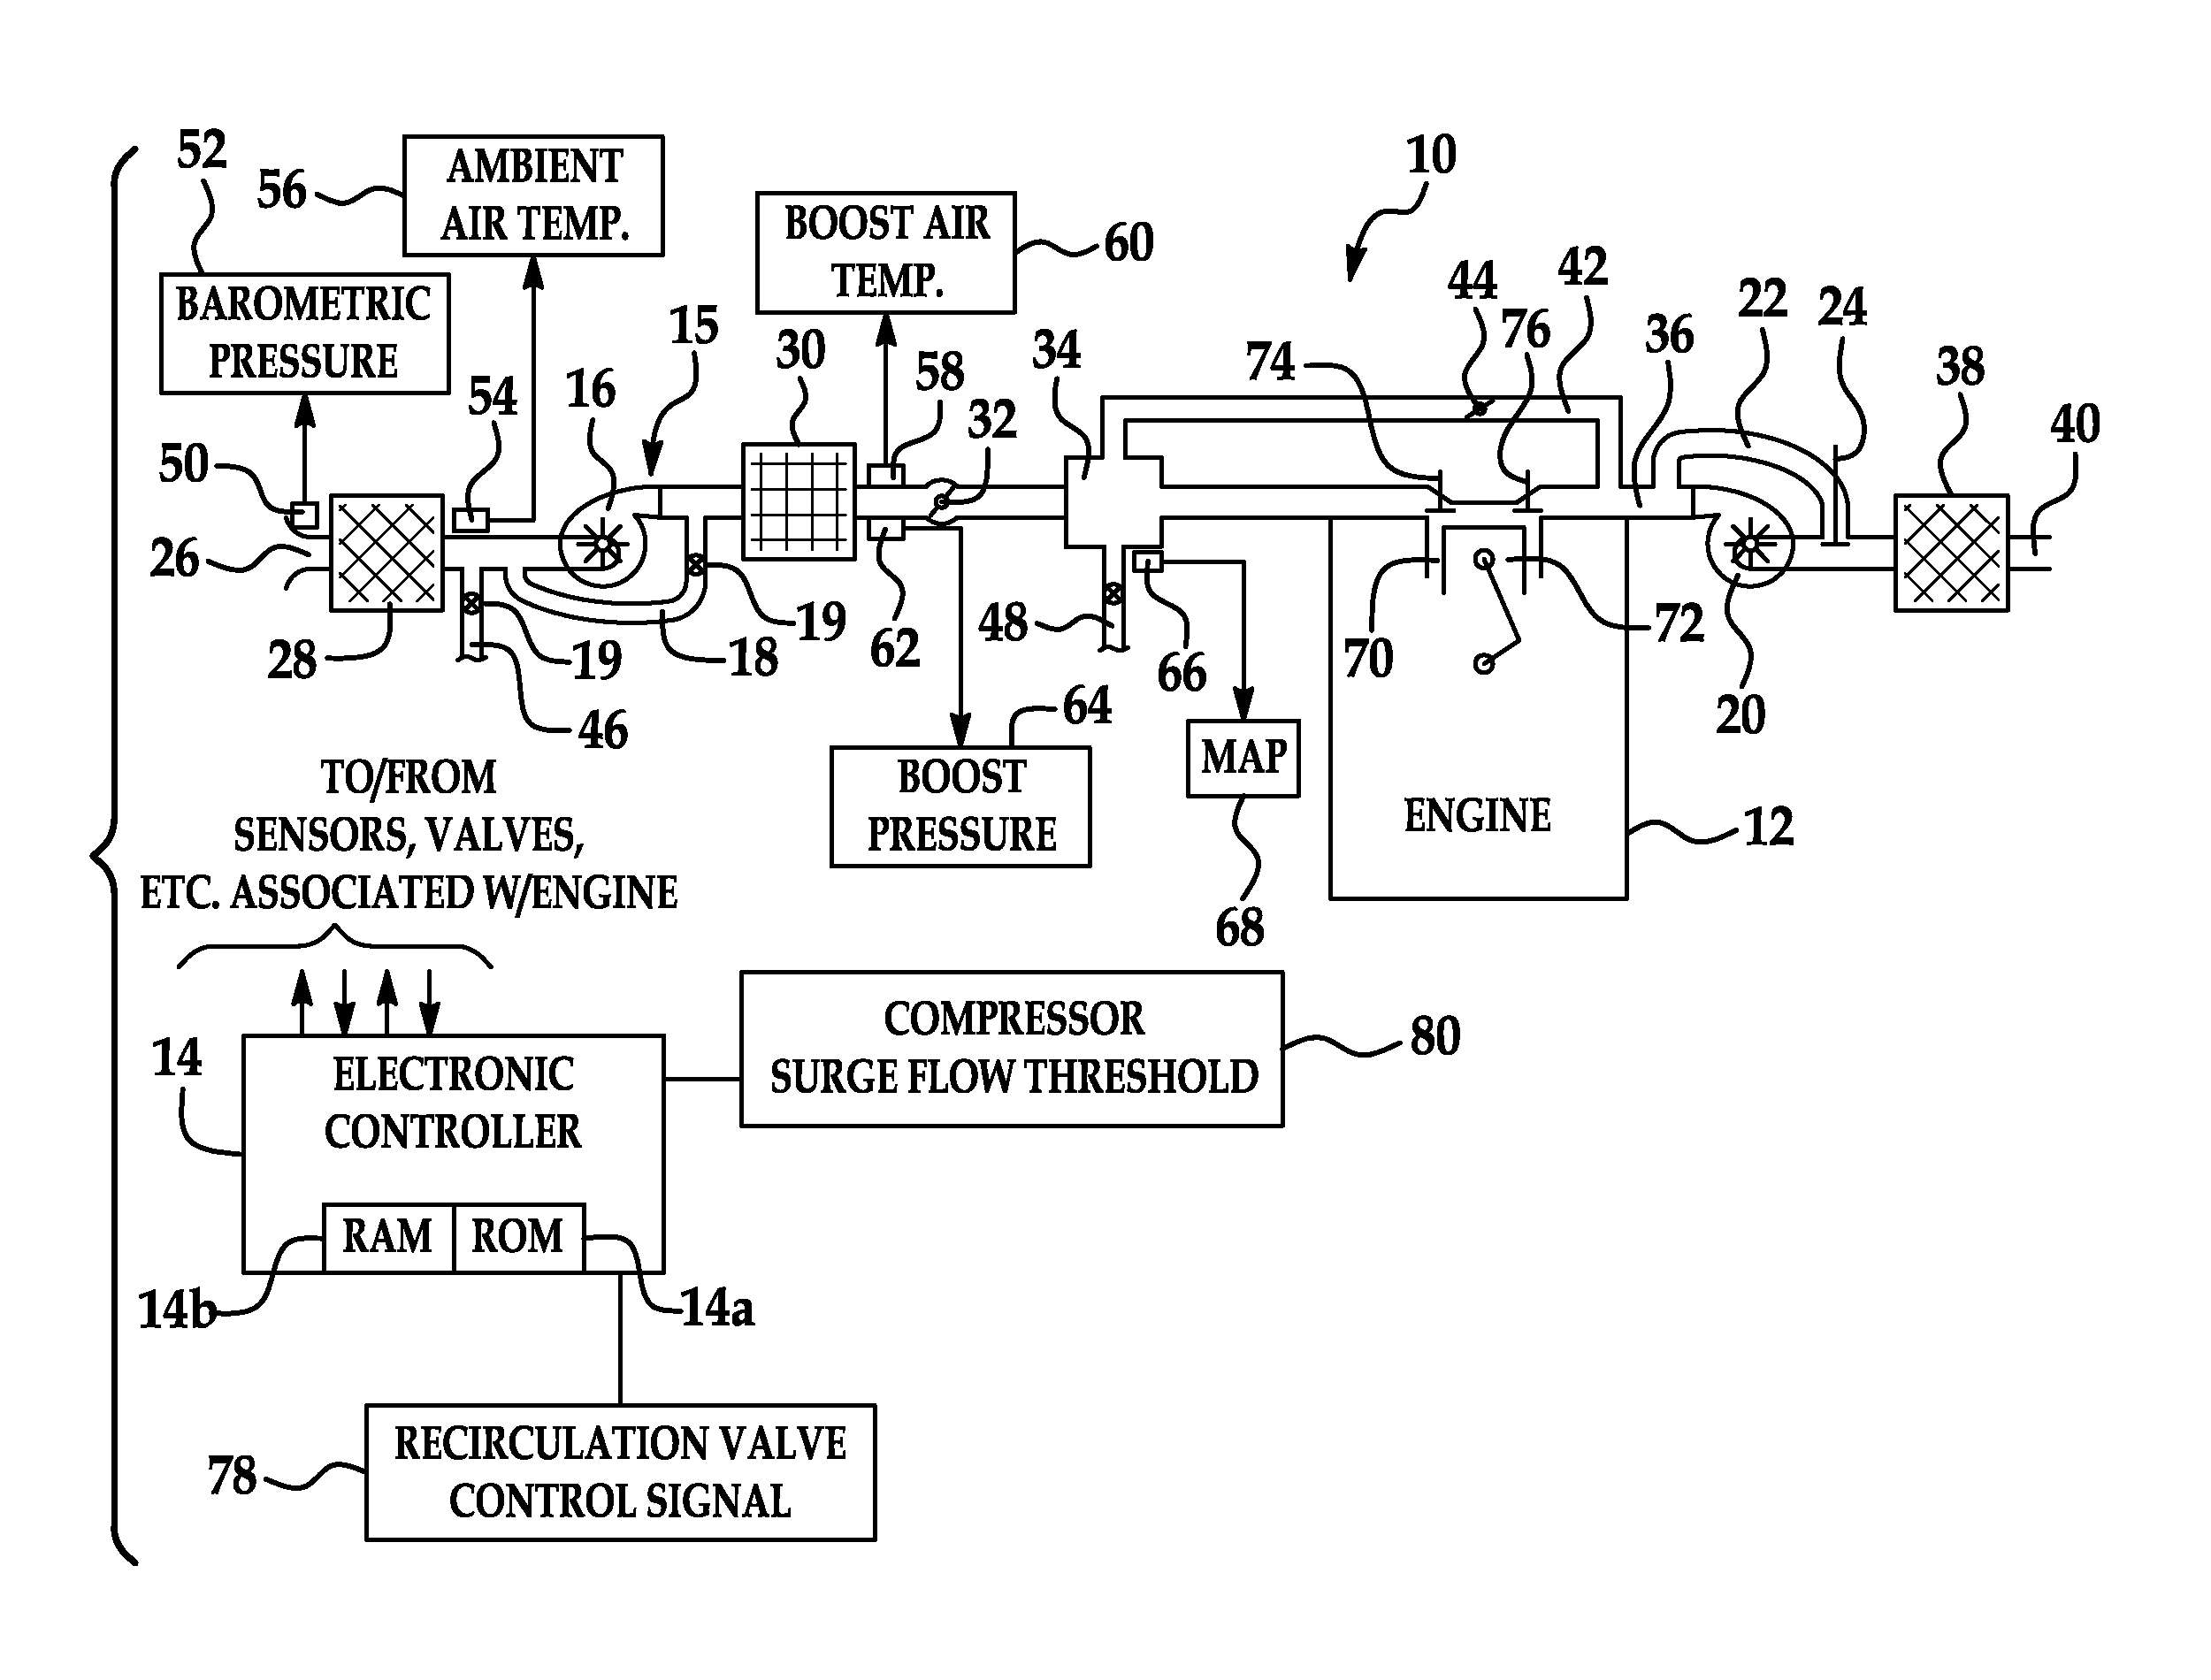 System and method for turbo compressor recirculation valve control